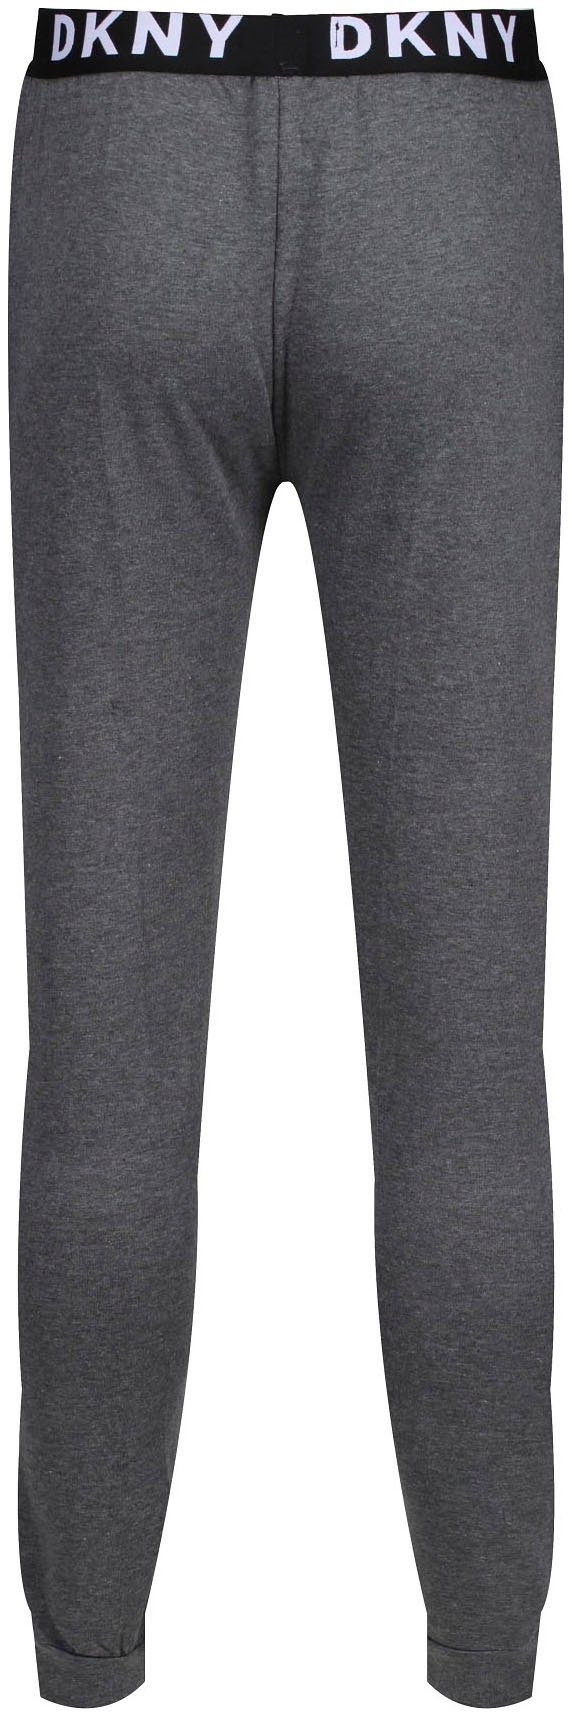 DKNY Loungepants marl EAGLES grey